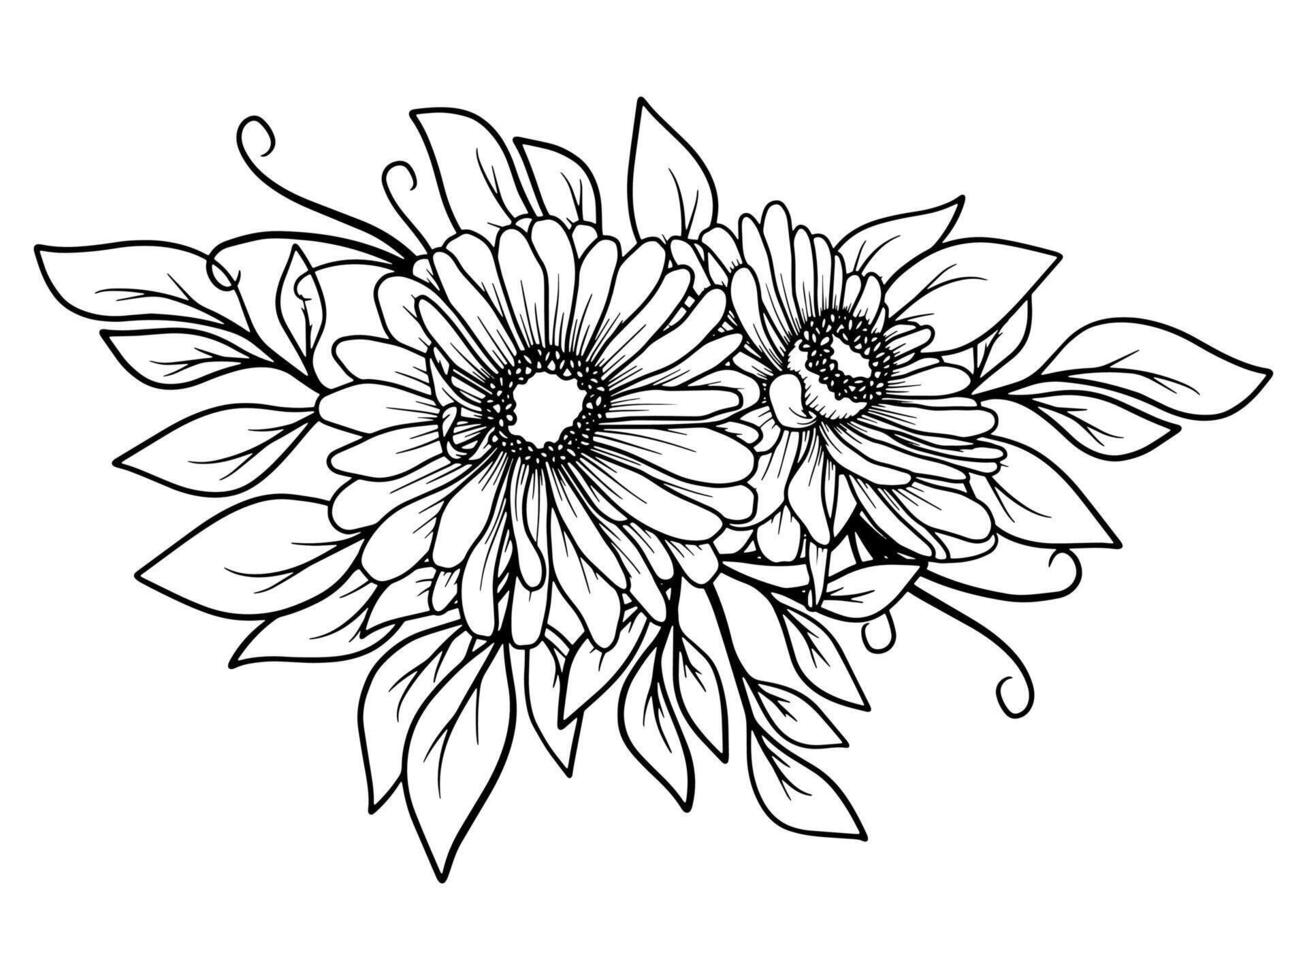 Hand Drawn Flower Line Art Illustration vector